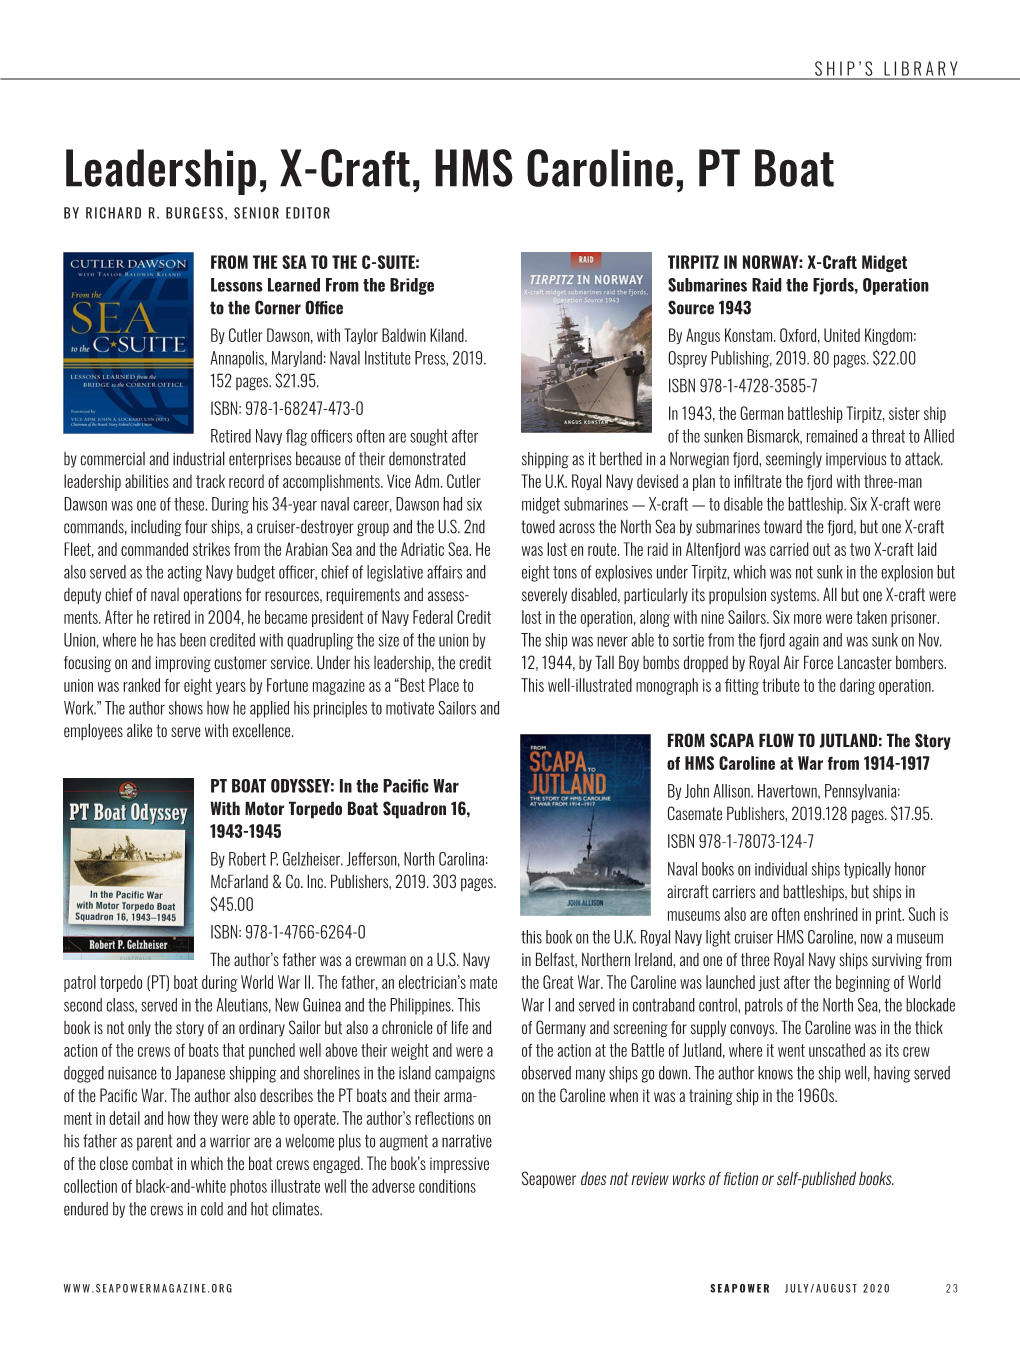 Leadership, X-Craft, HMS Caroline, PT Boat by RICHARD R